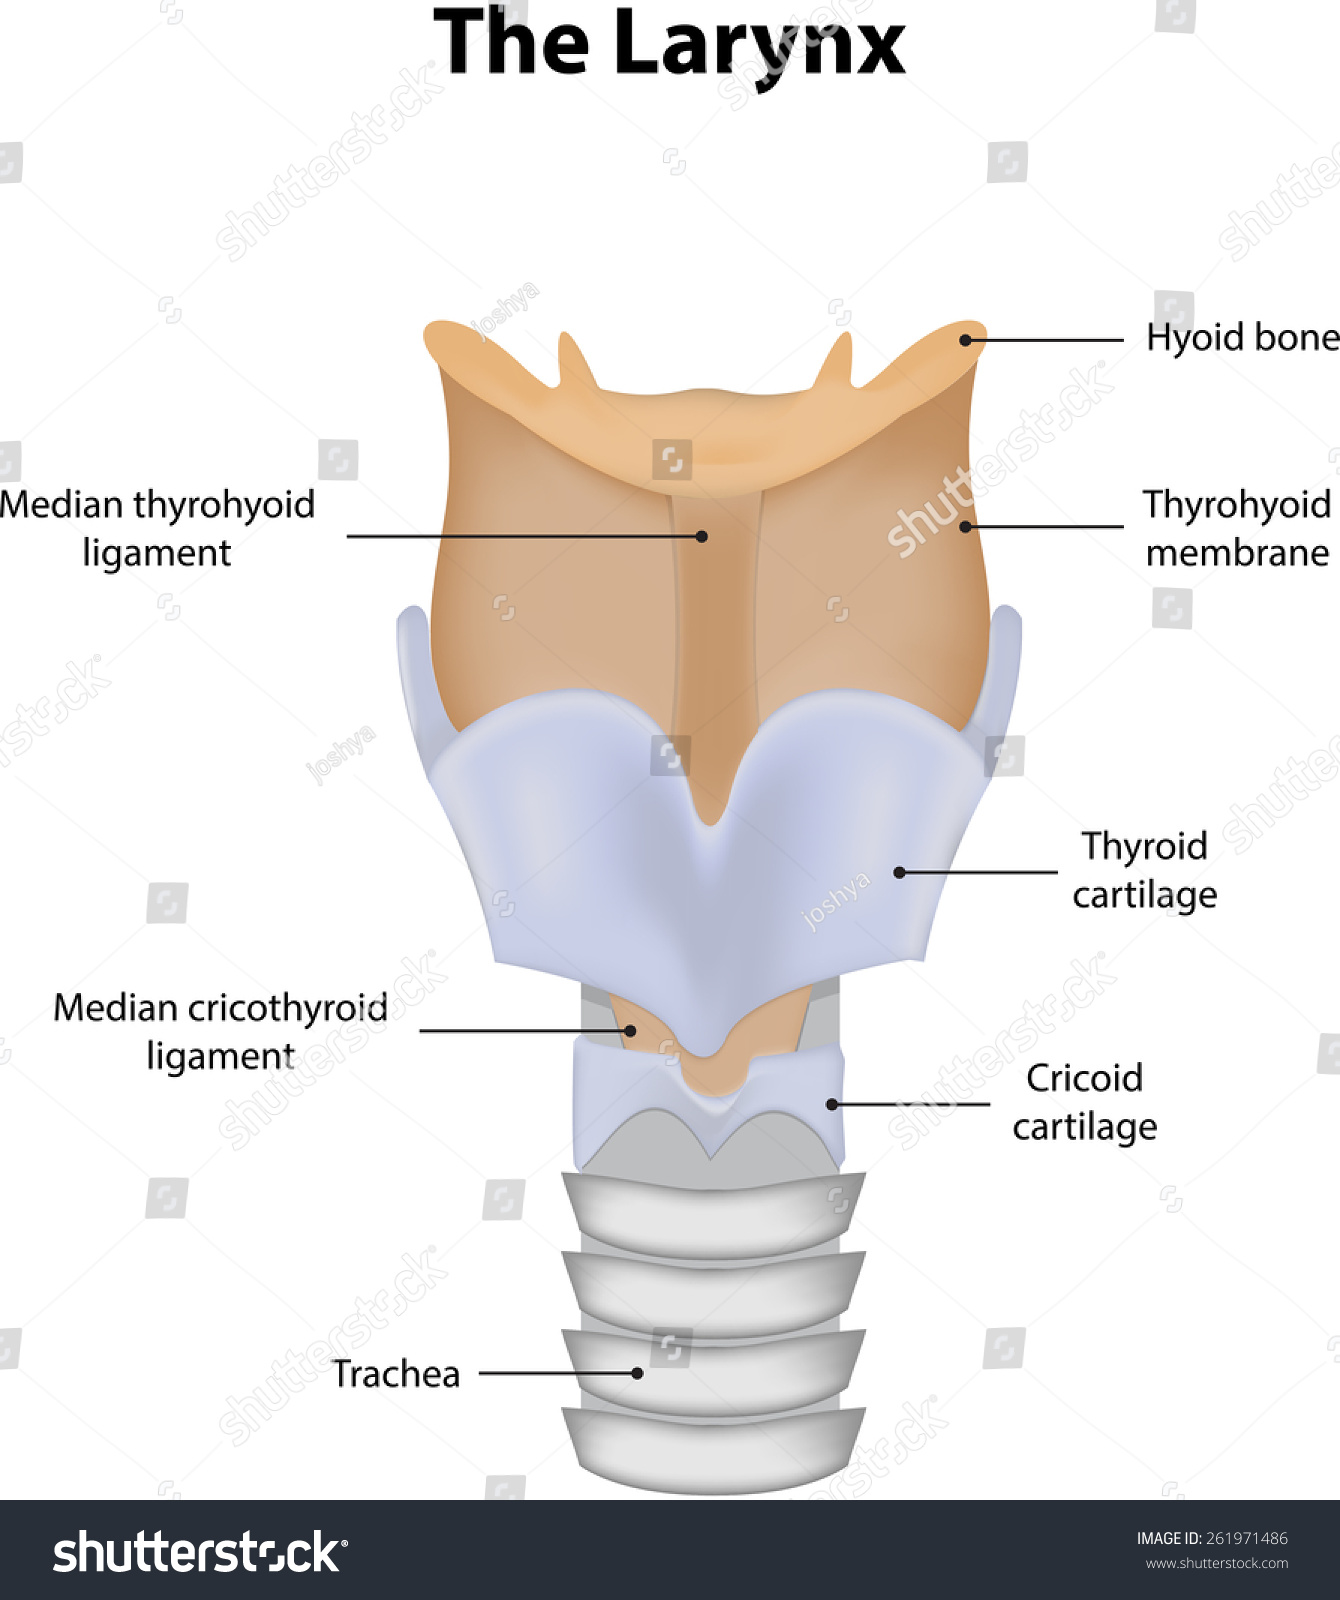 Larynx Labeled Diagram Stock Illustration 261971486